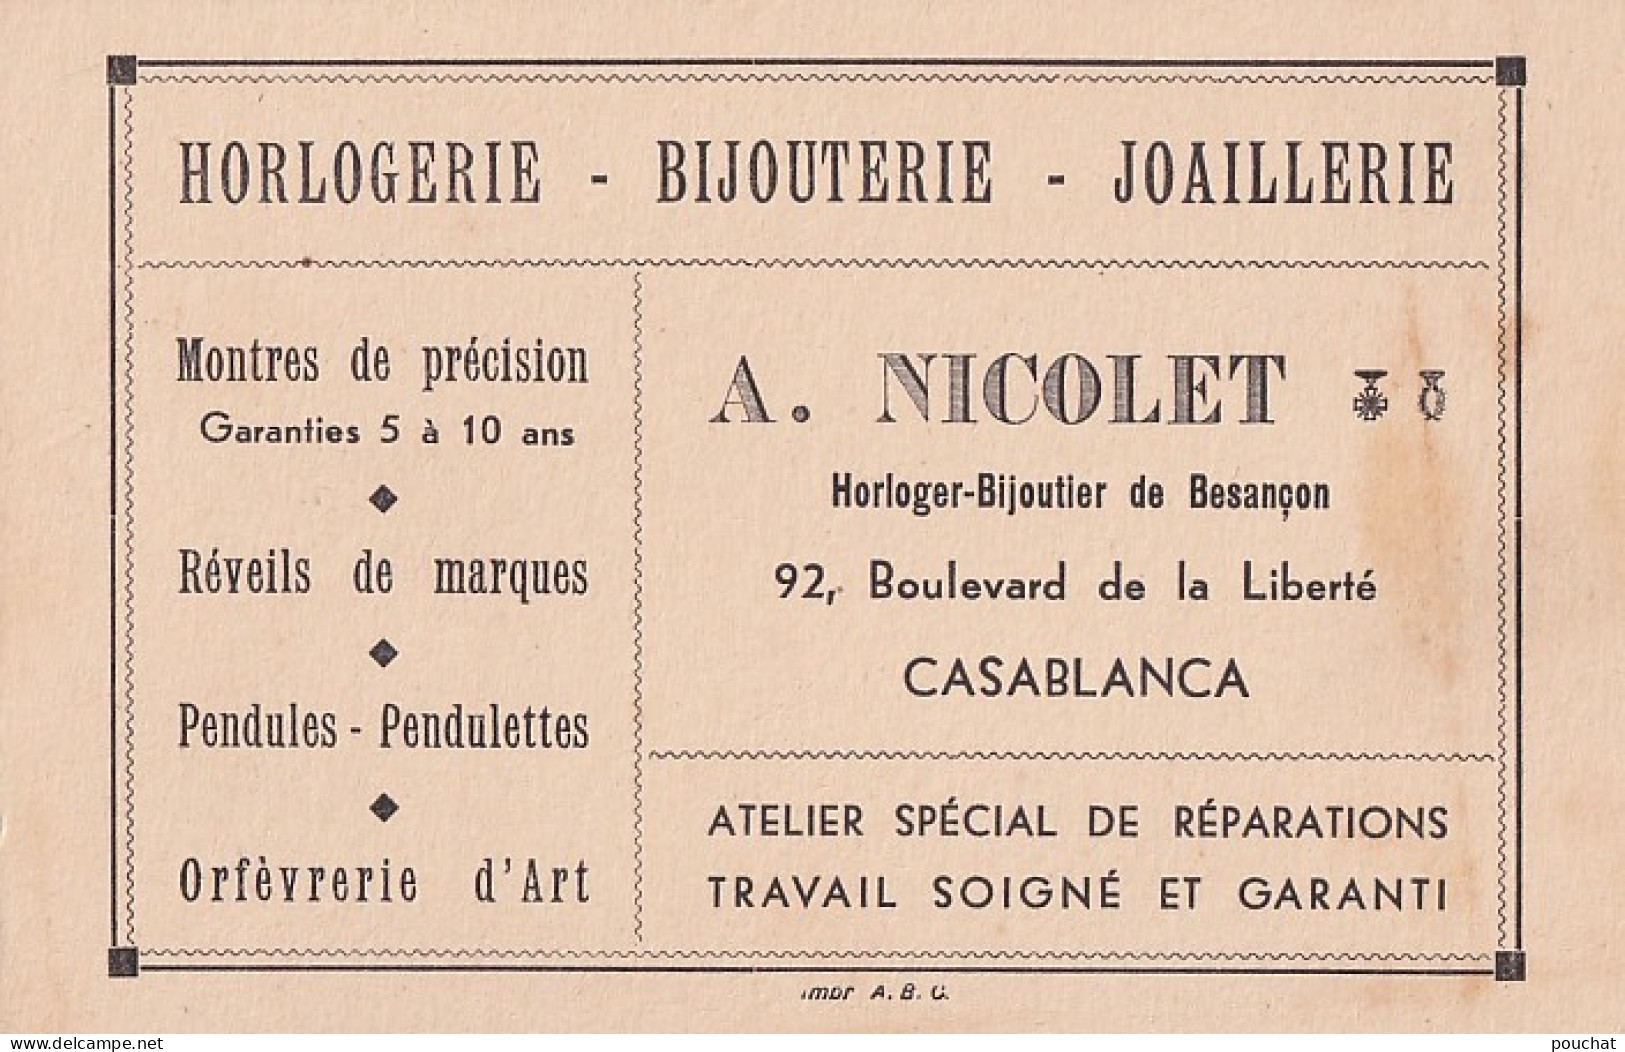   CASABLANCA - A. NICOLET - HORLOGERIE - BIJOUTERIE - JOAILLERIE - 92 , BOULEVARD DE LA LIBERTE - Cartes De Visite